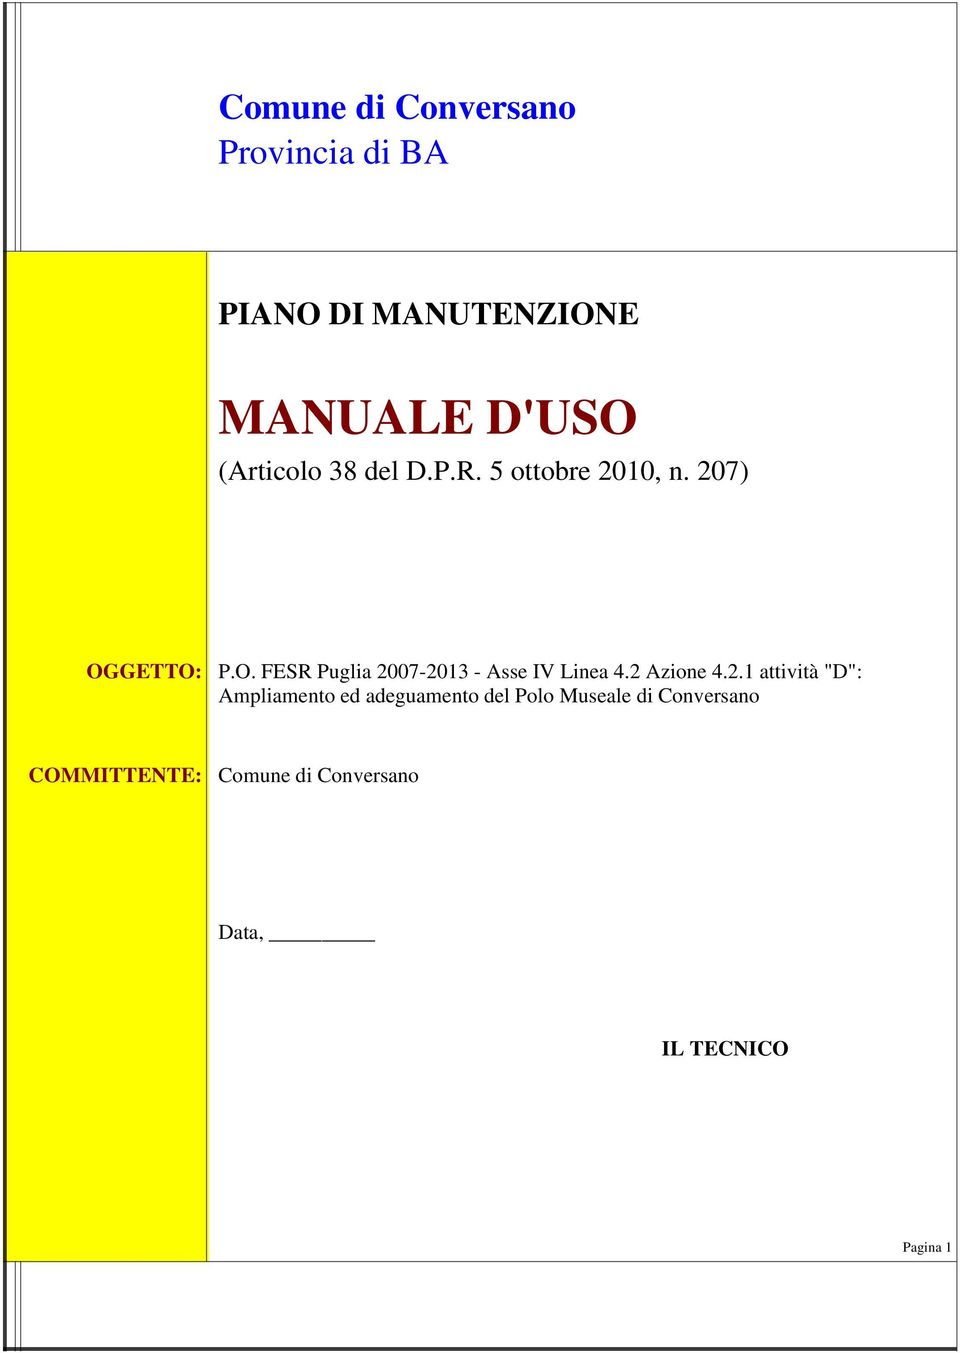 GETTO: P.O. FESR Puglia 20